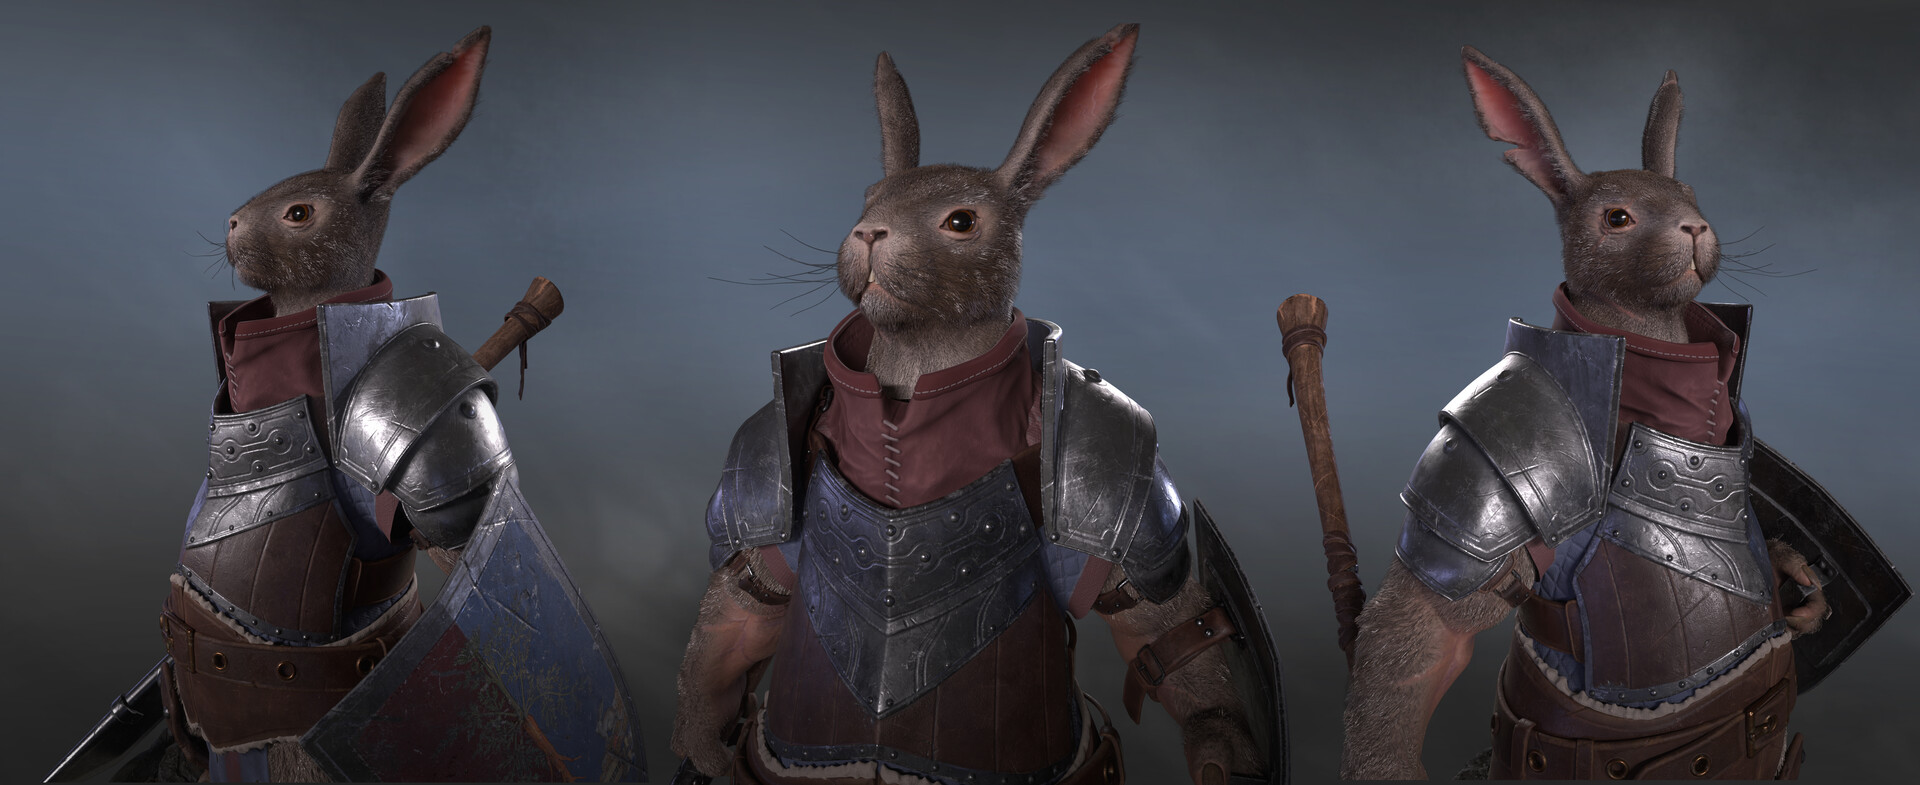 ArtStation - Zombie rabbit